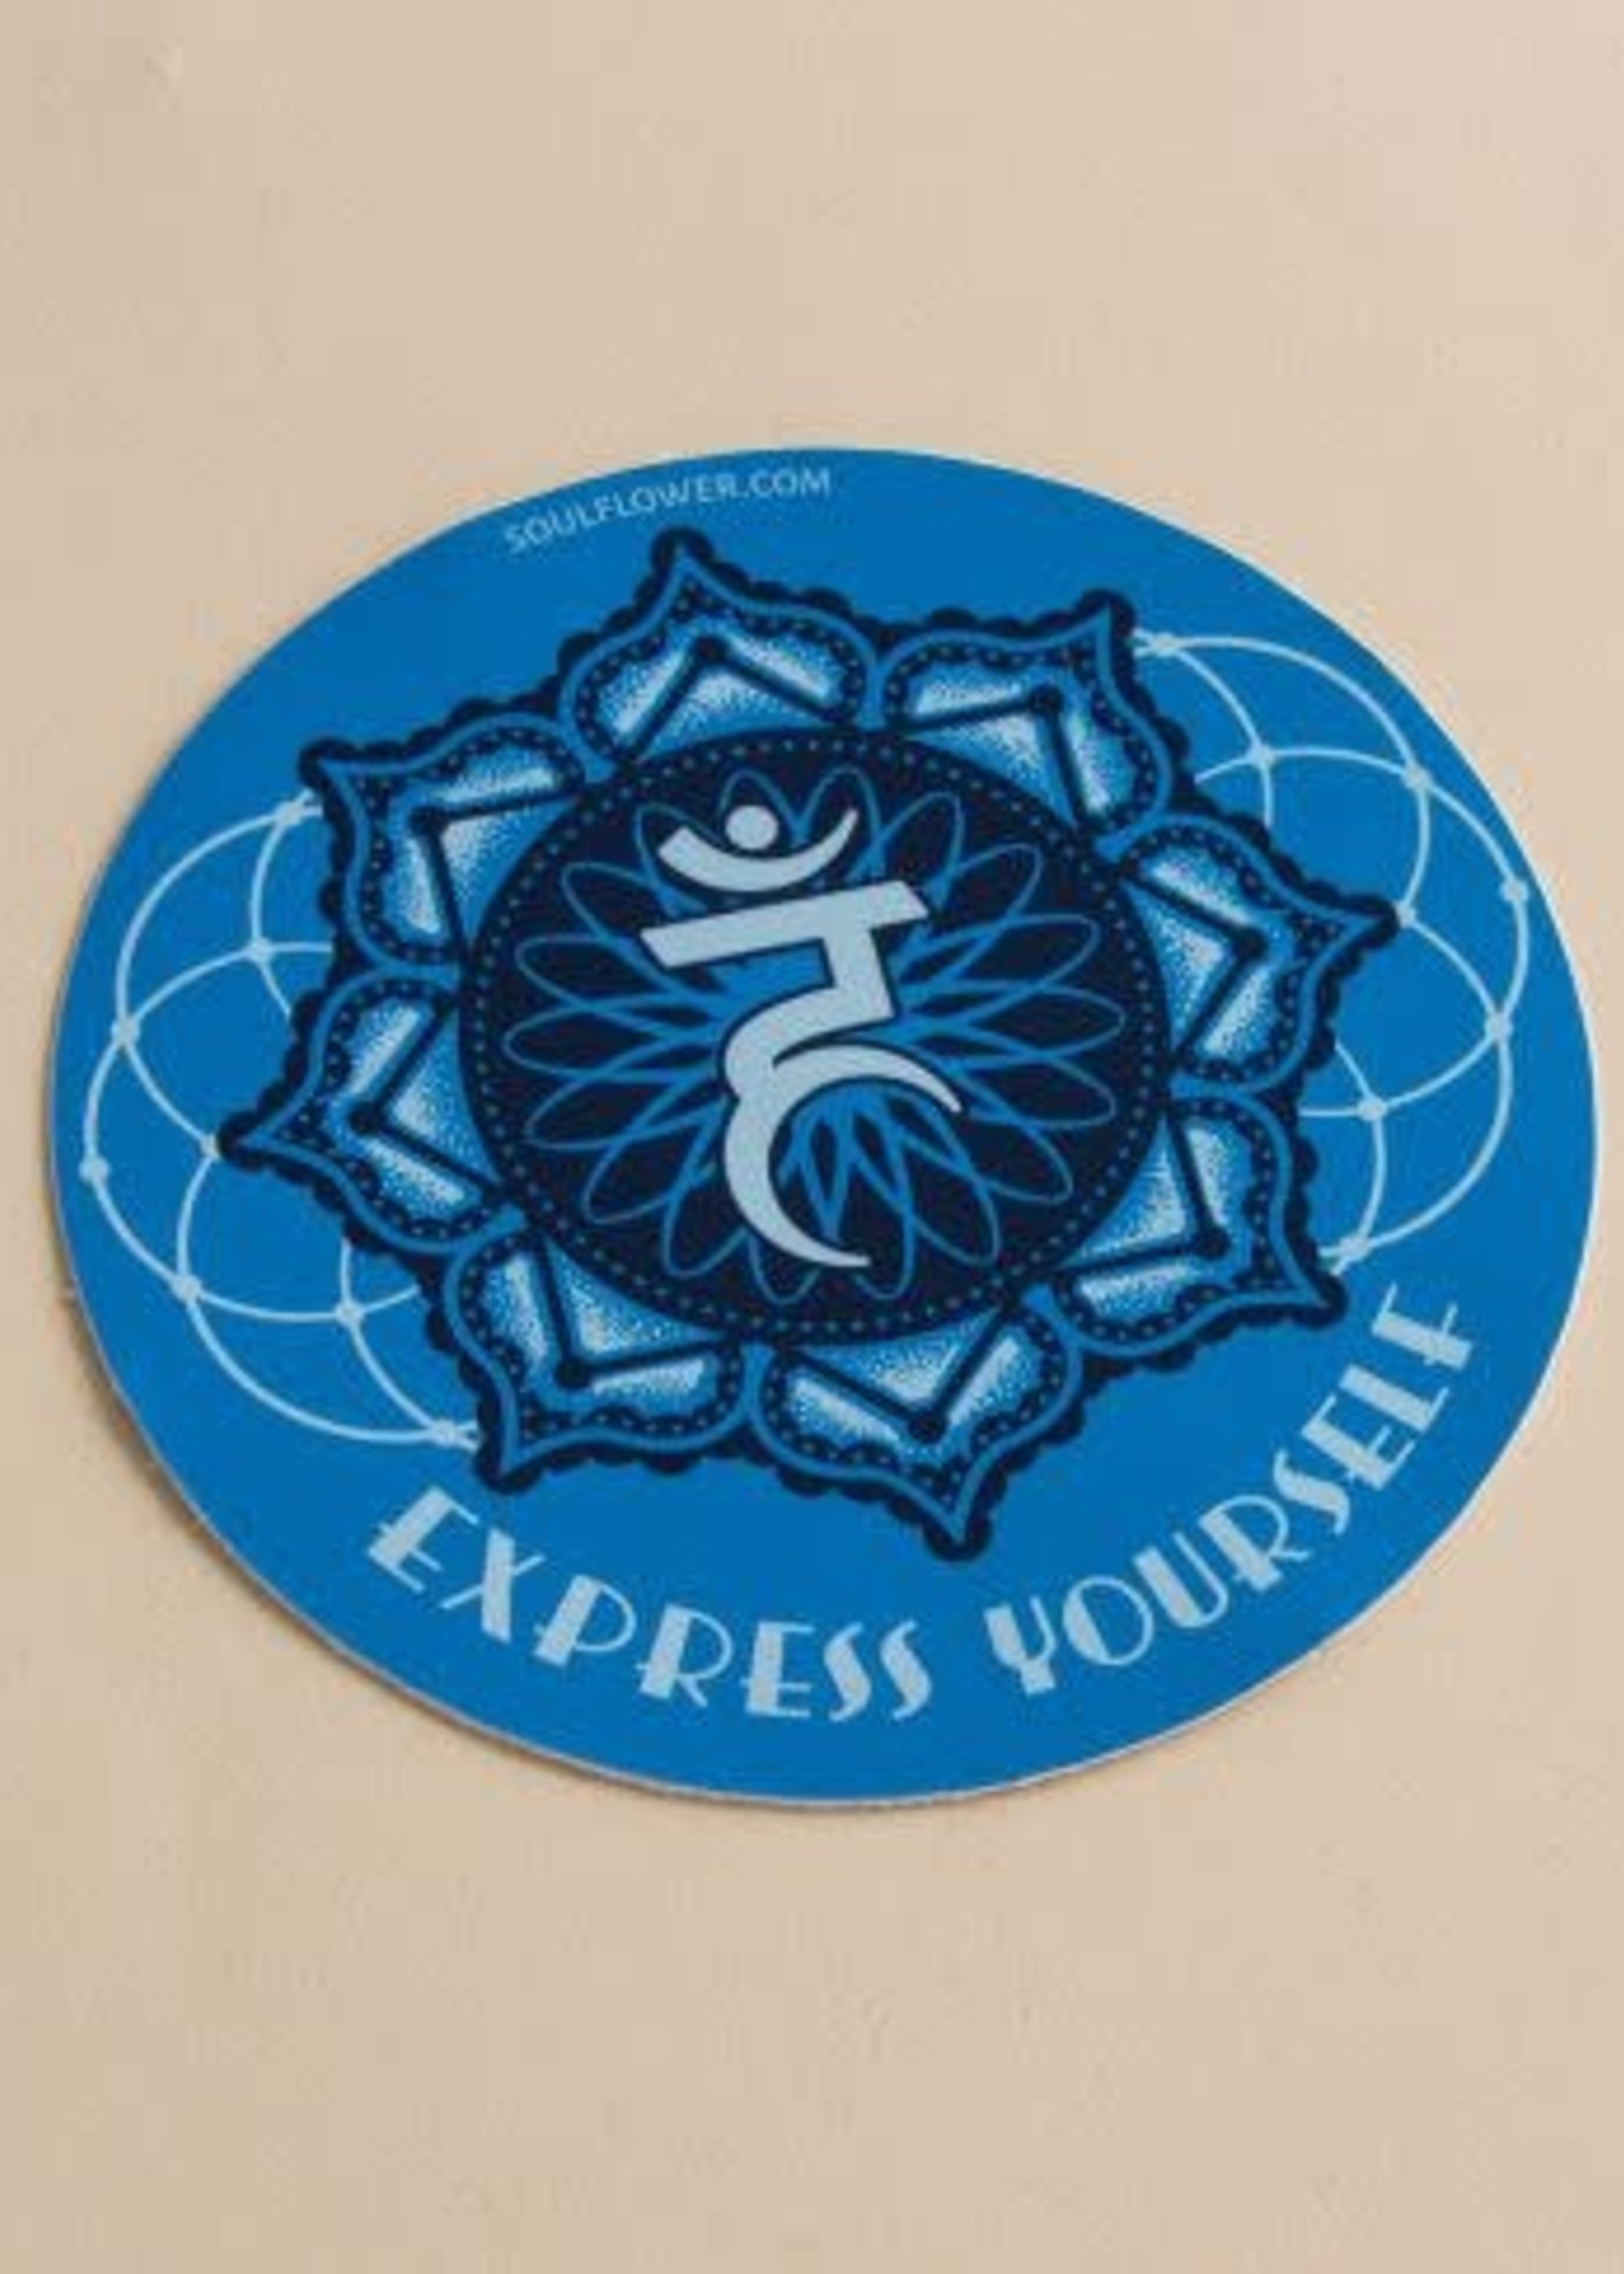 Bumper Sticker Express Yourself Chakra